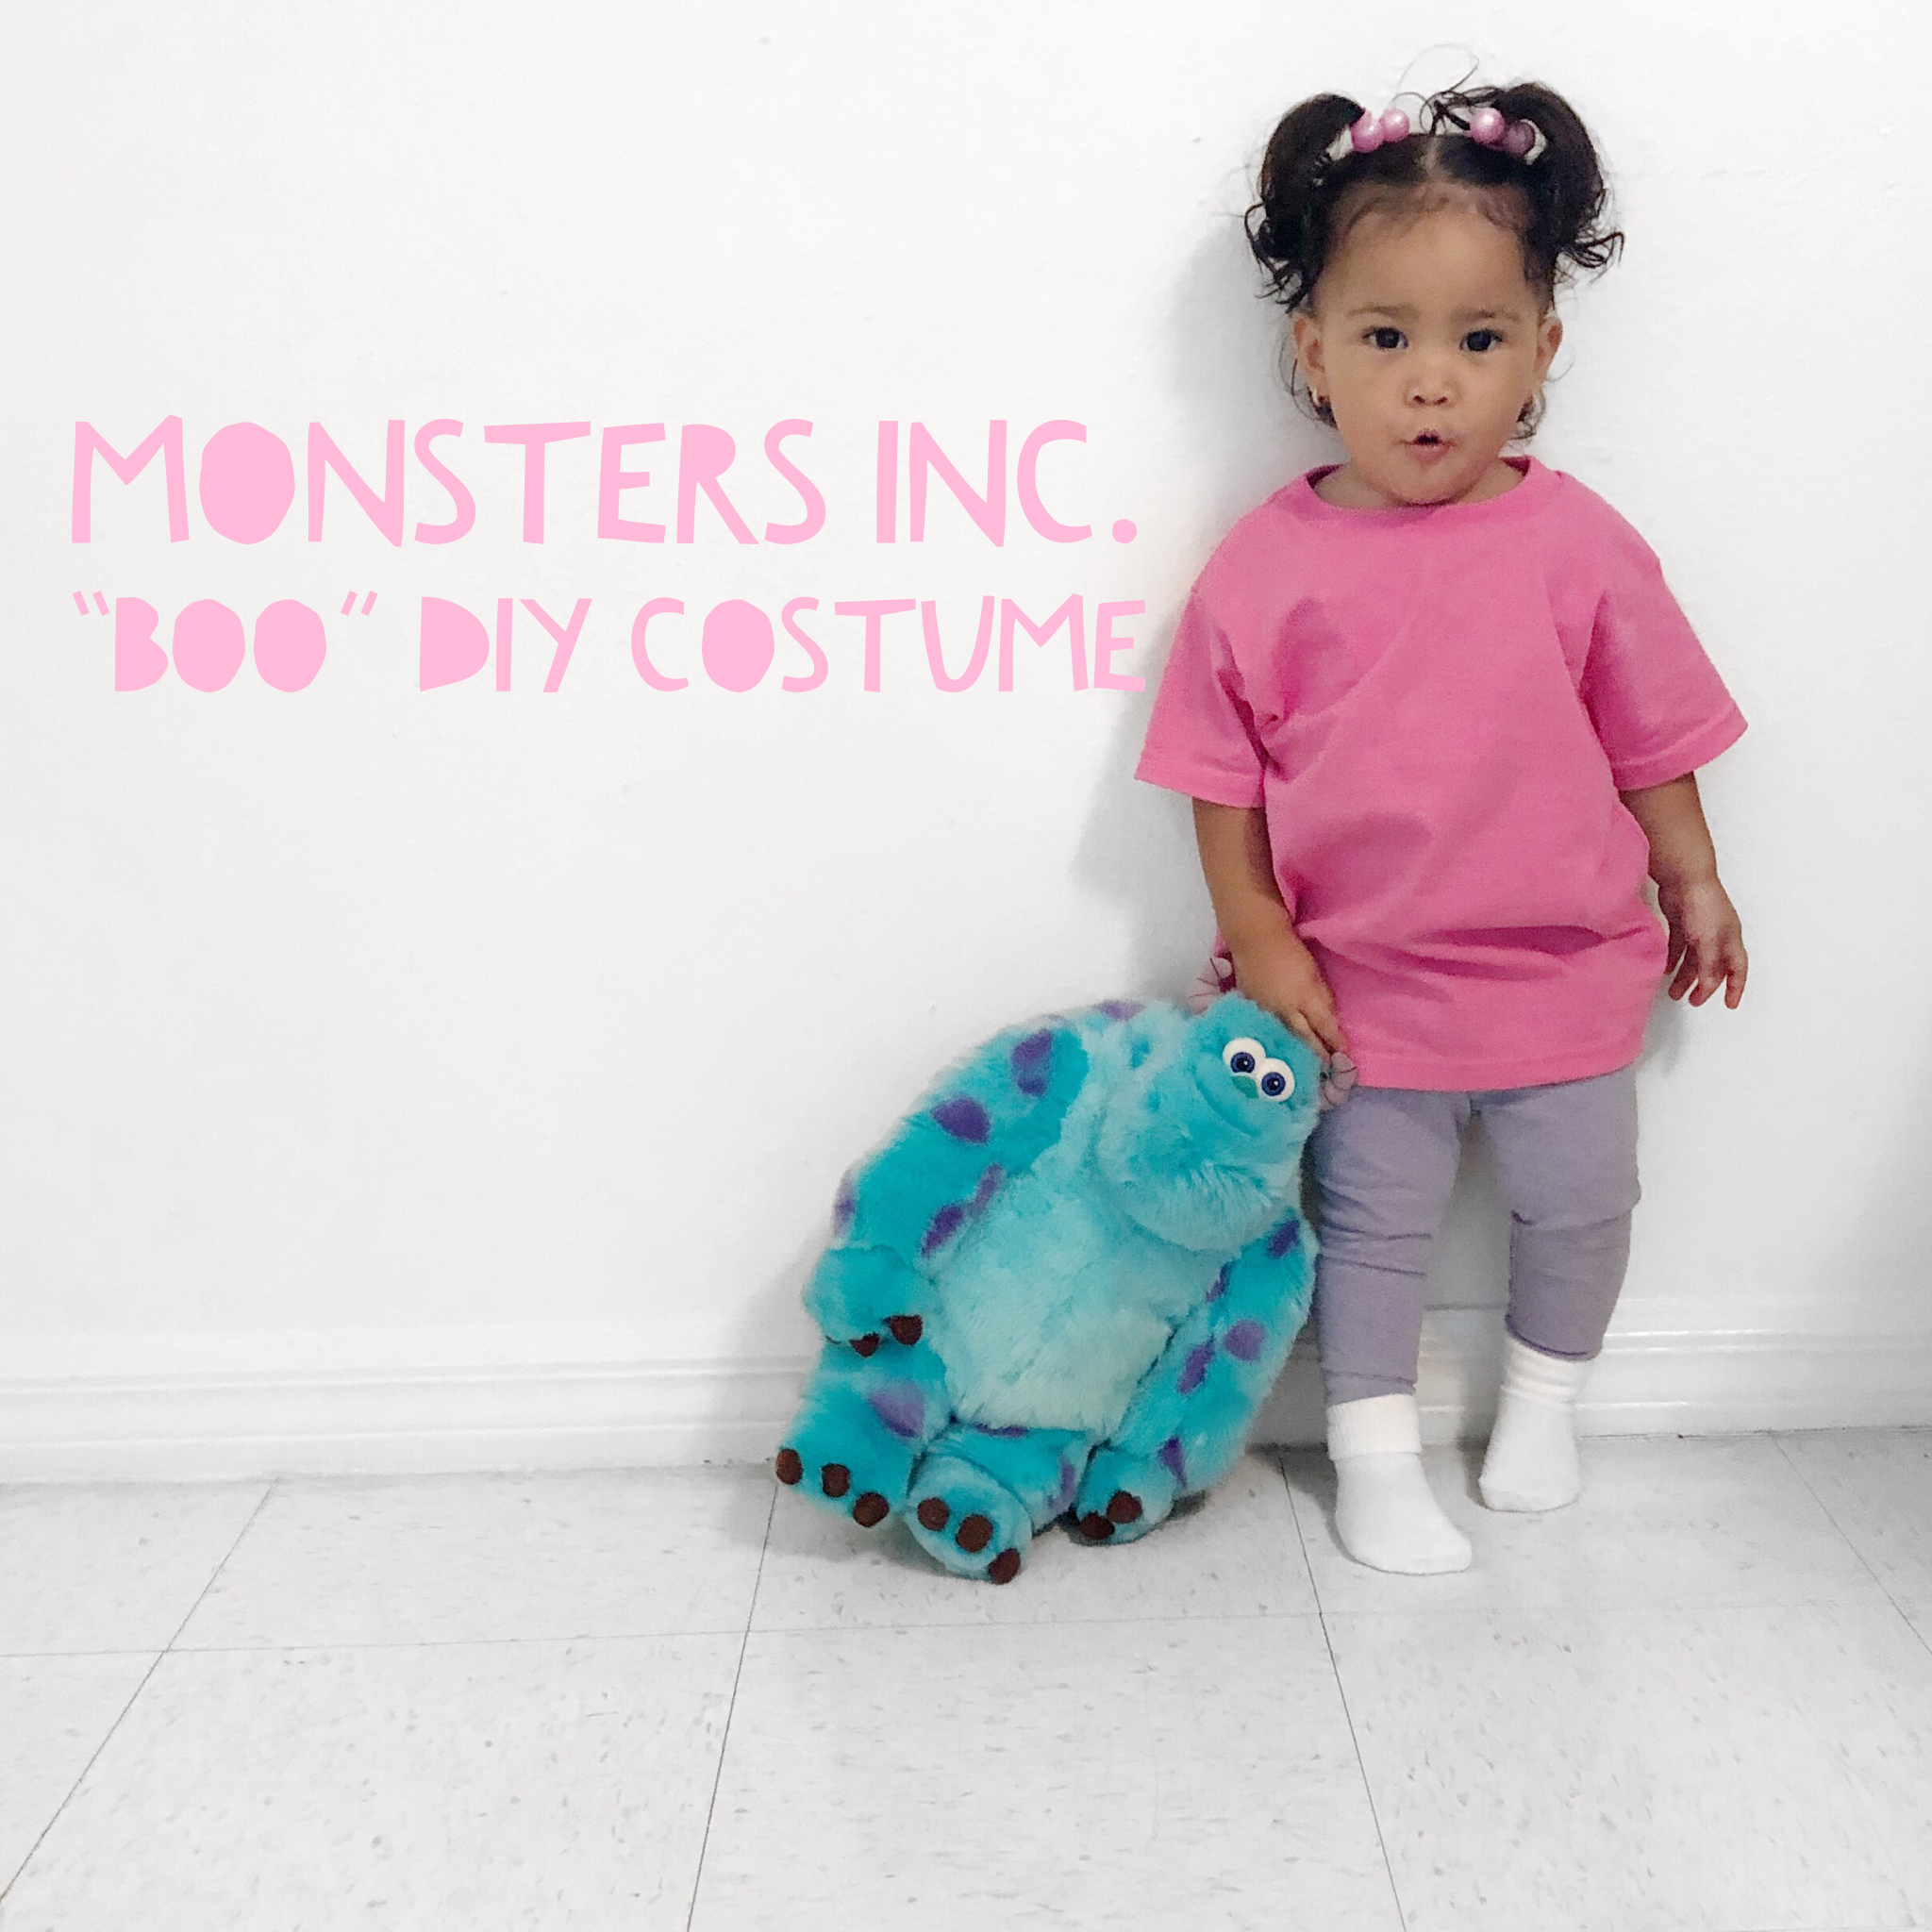 Monsters INC “BOO” DIY Costume